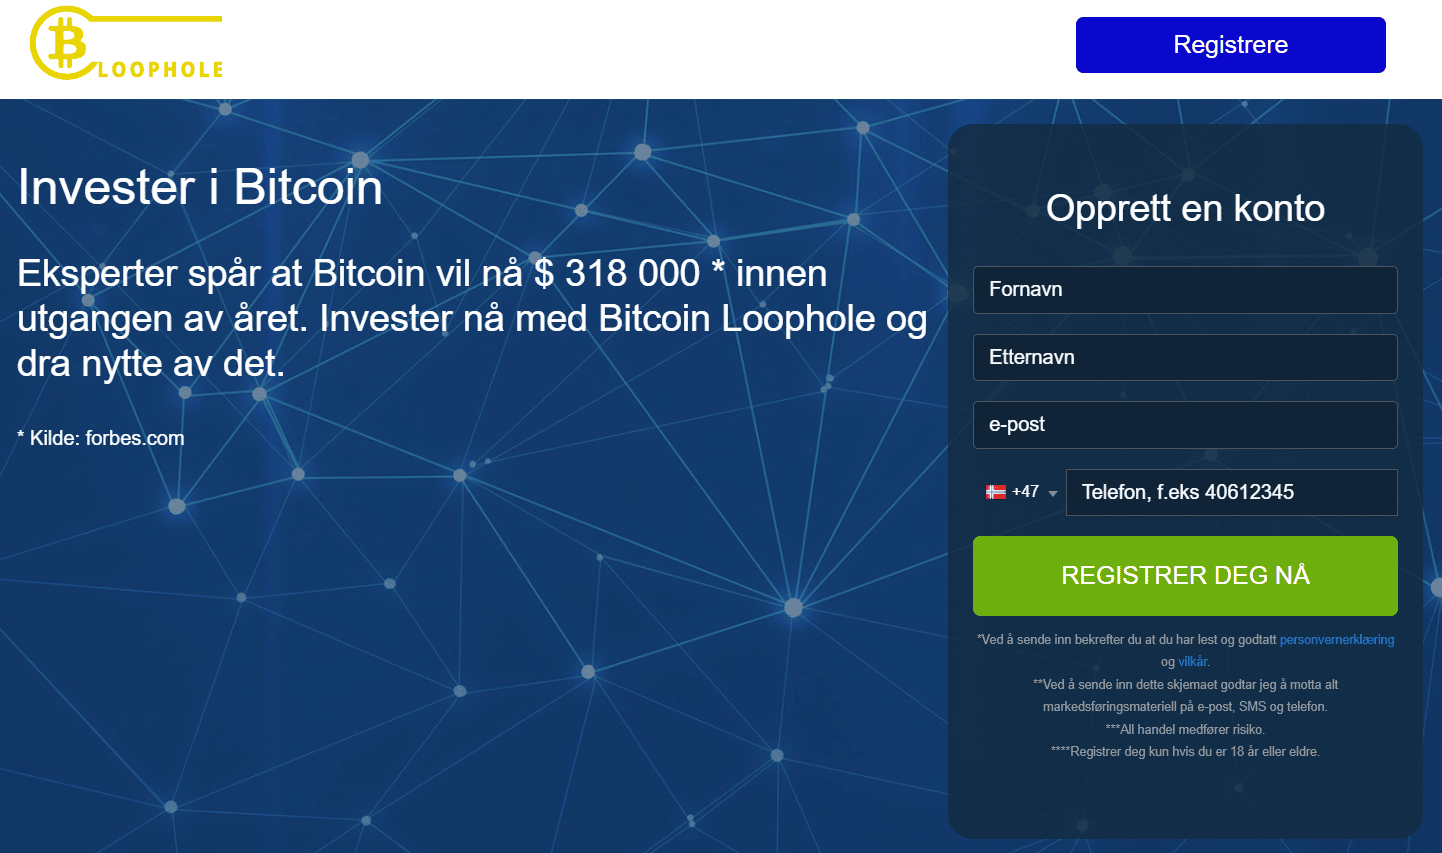 bitcoin loophole